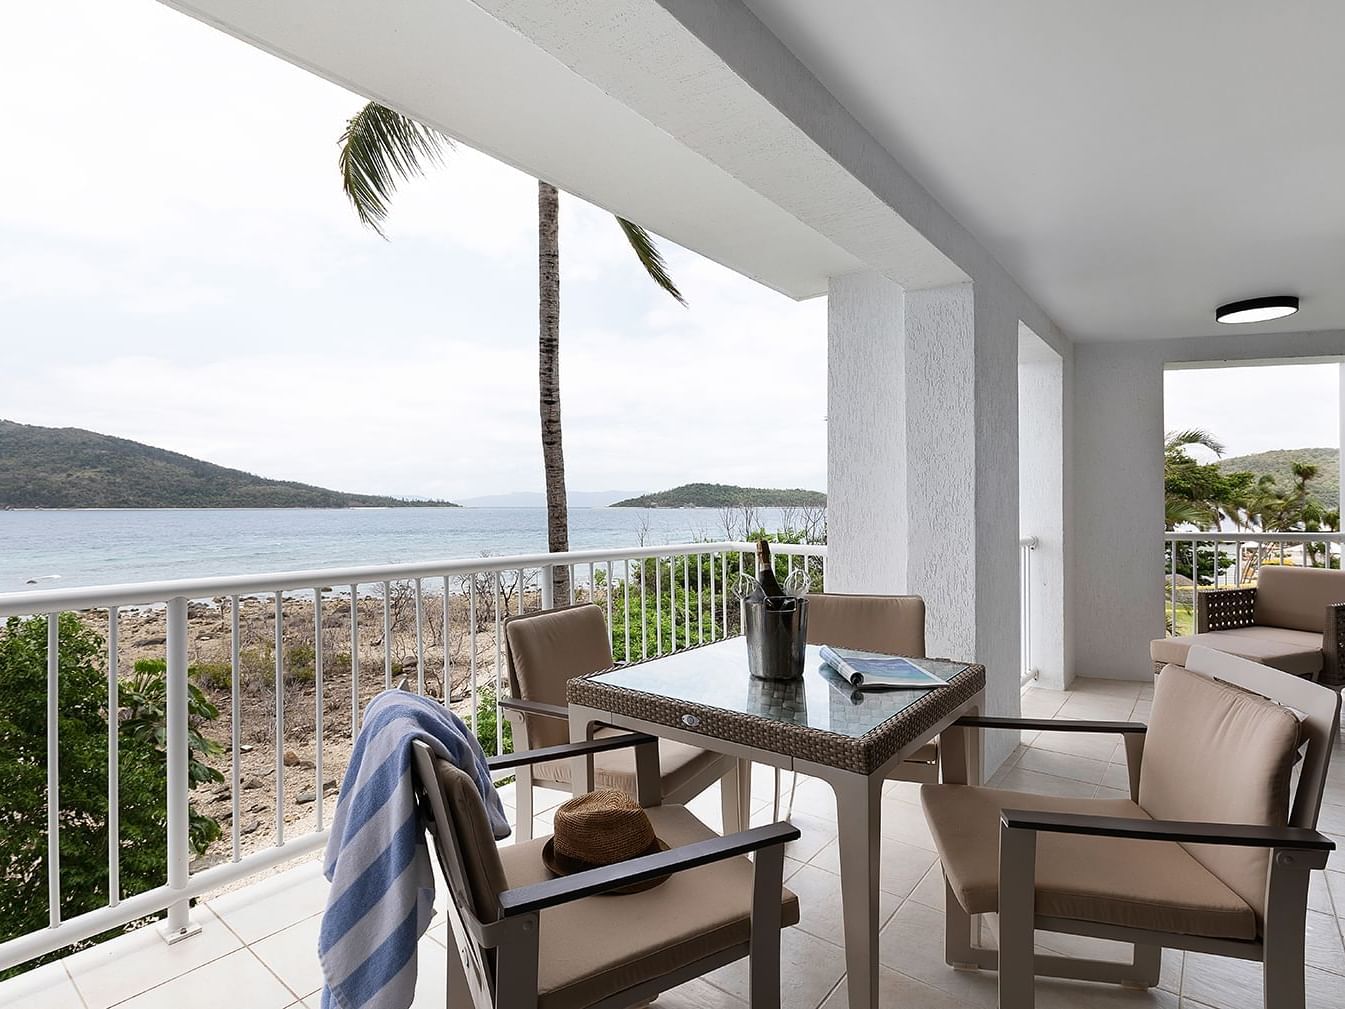 Terrace sitting area in Vista Suite at Daydream Island Resort